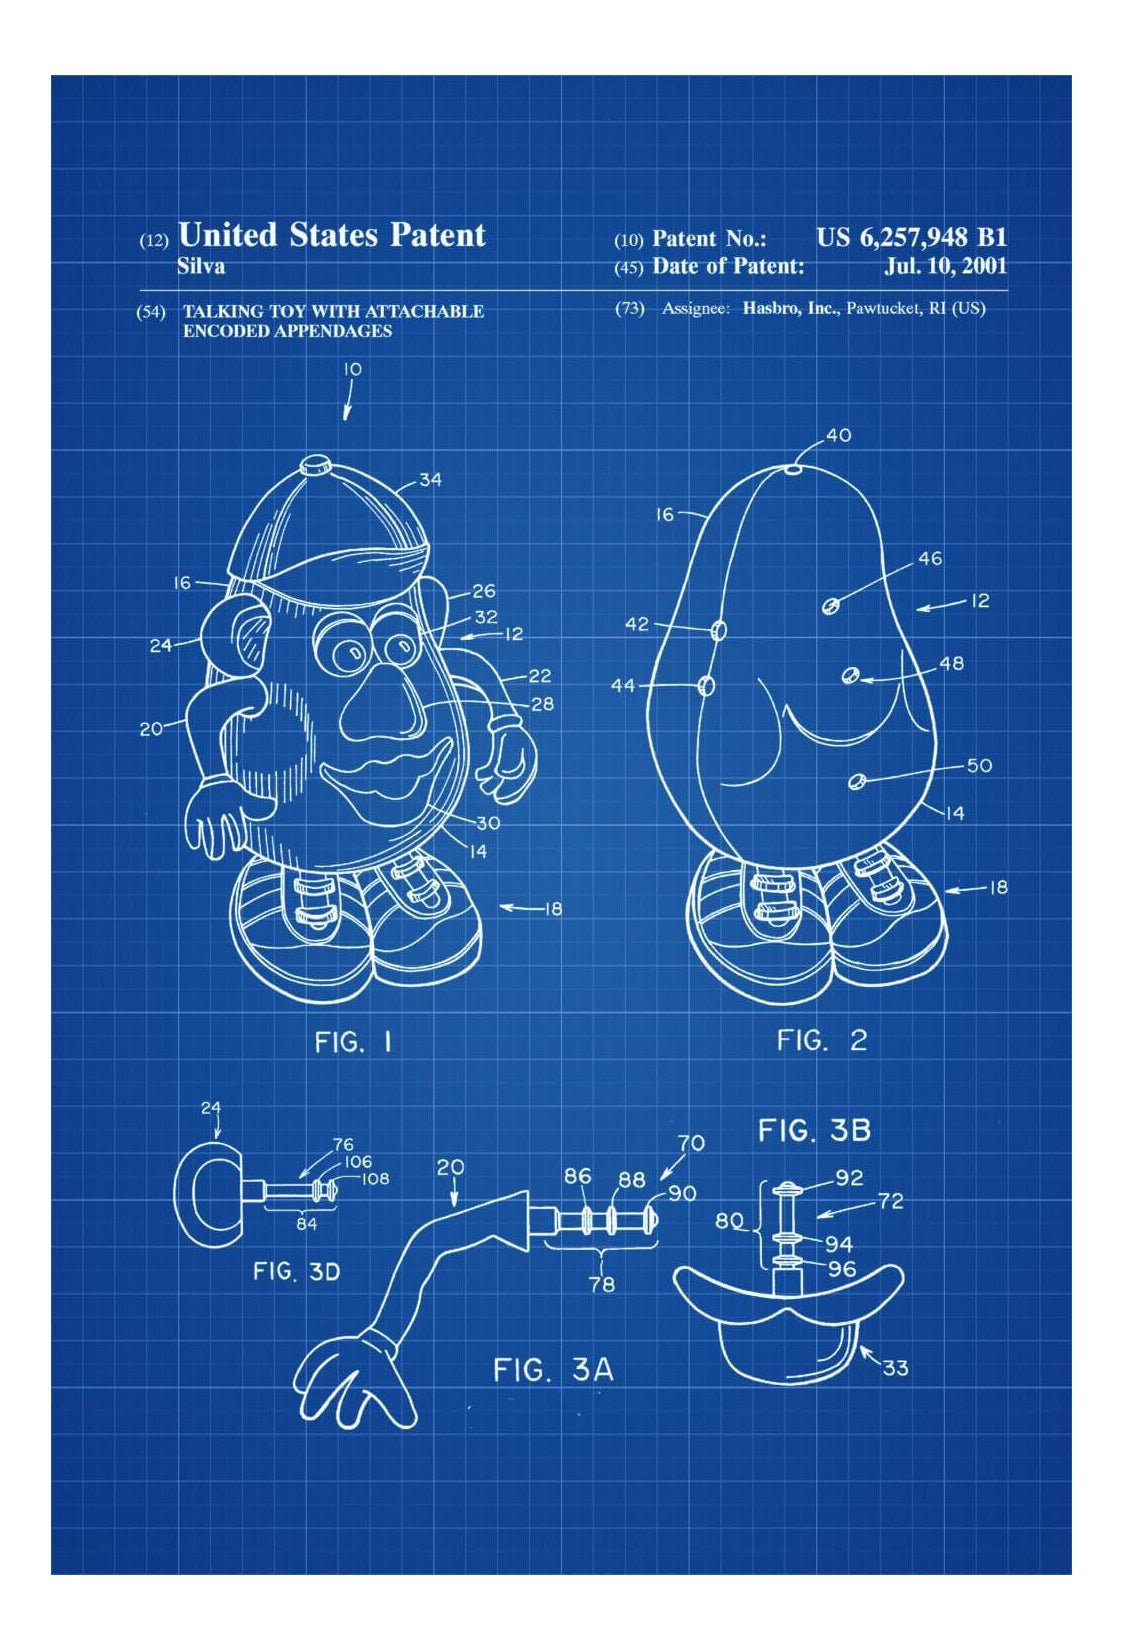 Mr. Potato Head - Patent Art Print - Blueprint — Fresh Prints of CT